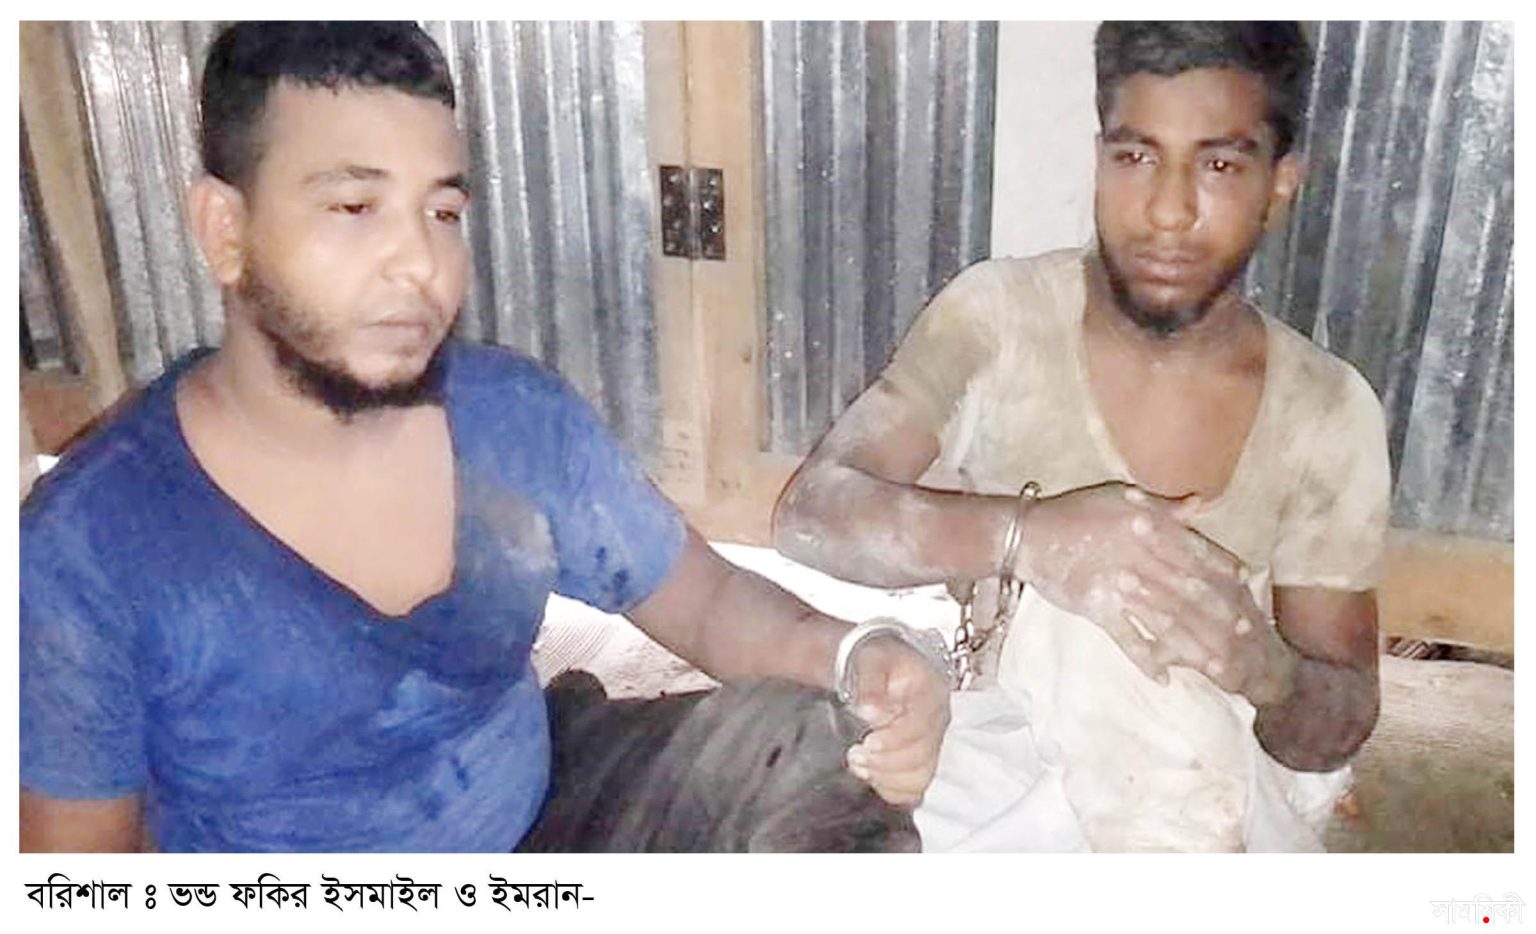 Barishal Photo Two fake exorcist siblings arrested in Barishal বরিশালে কৃষক হত্যার ঘটনায় ভন্ড ফকির দুই ভাইকে জেলহাজতে প্রেরণ